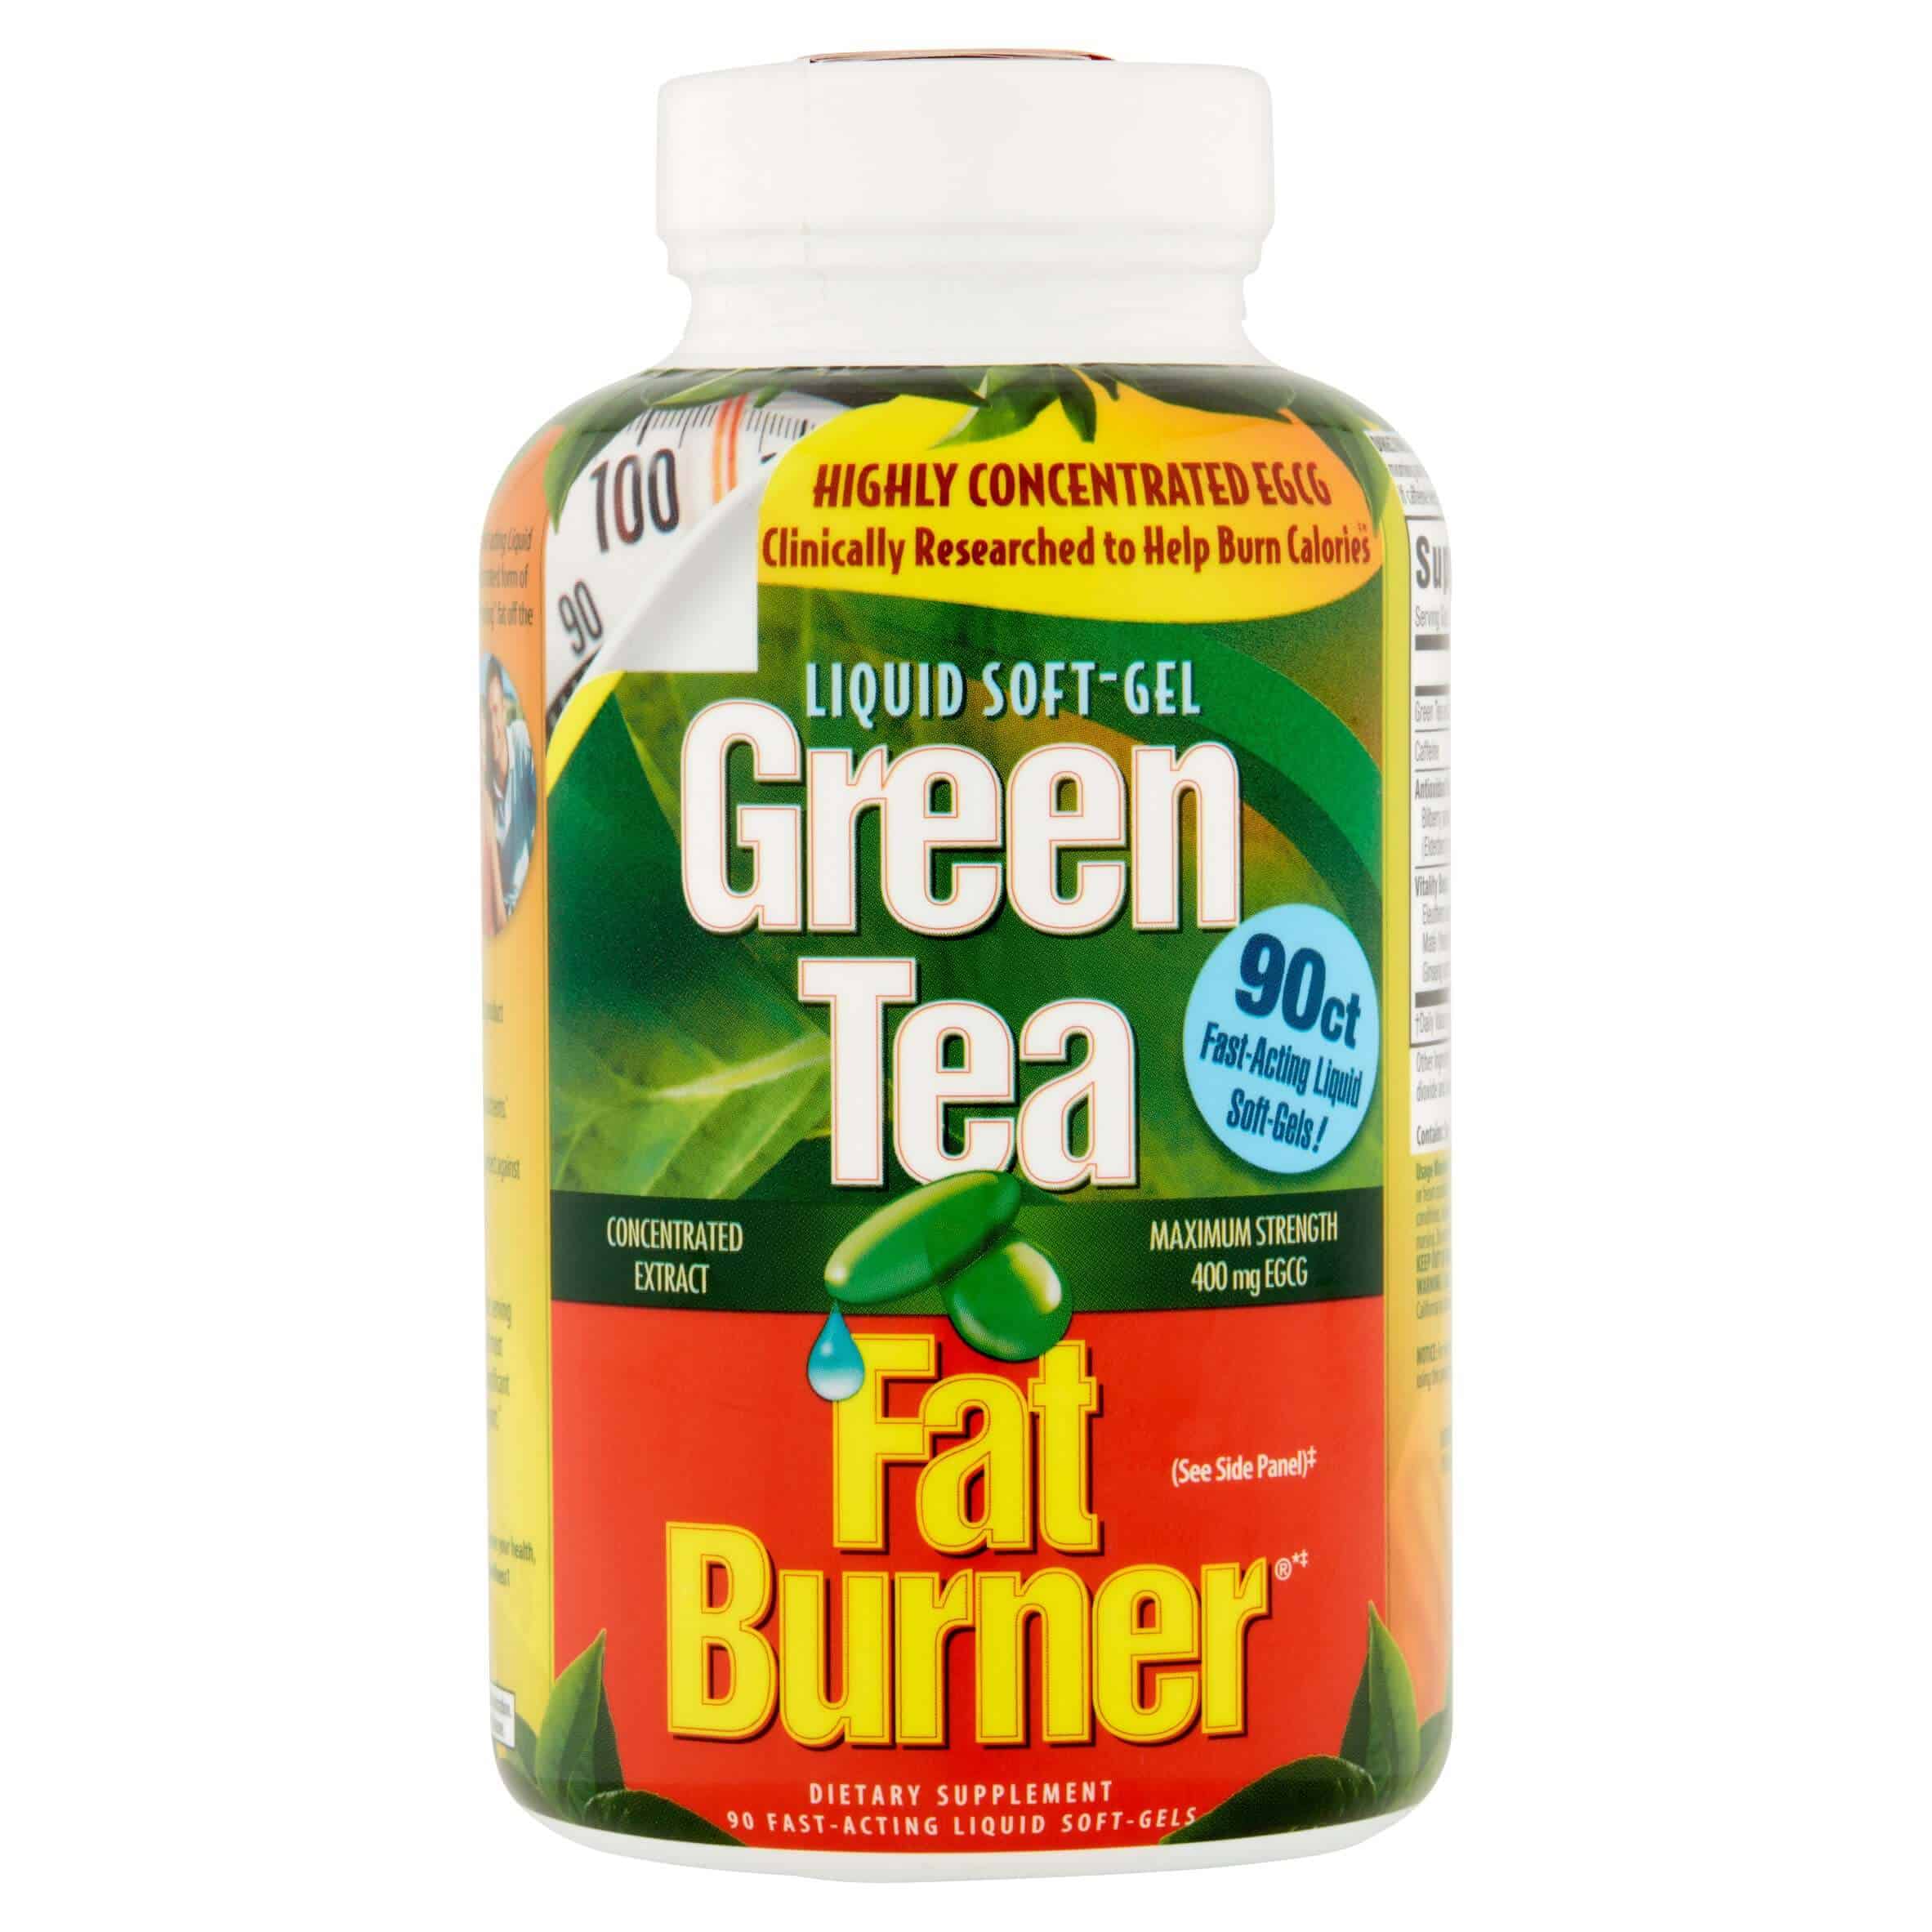 Green Tea Fat Burner Review (UPDATE: 2020)